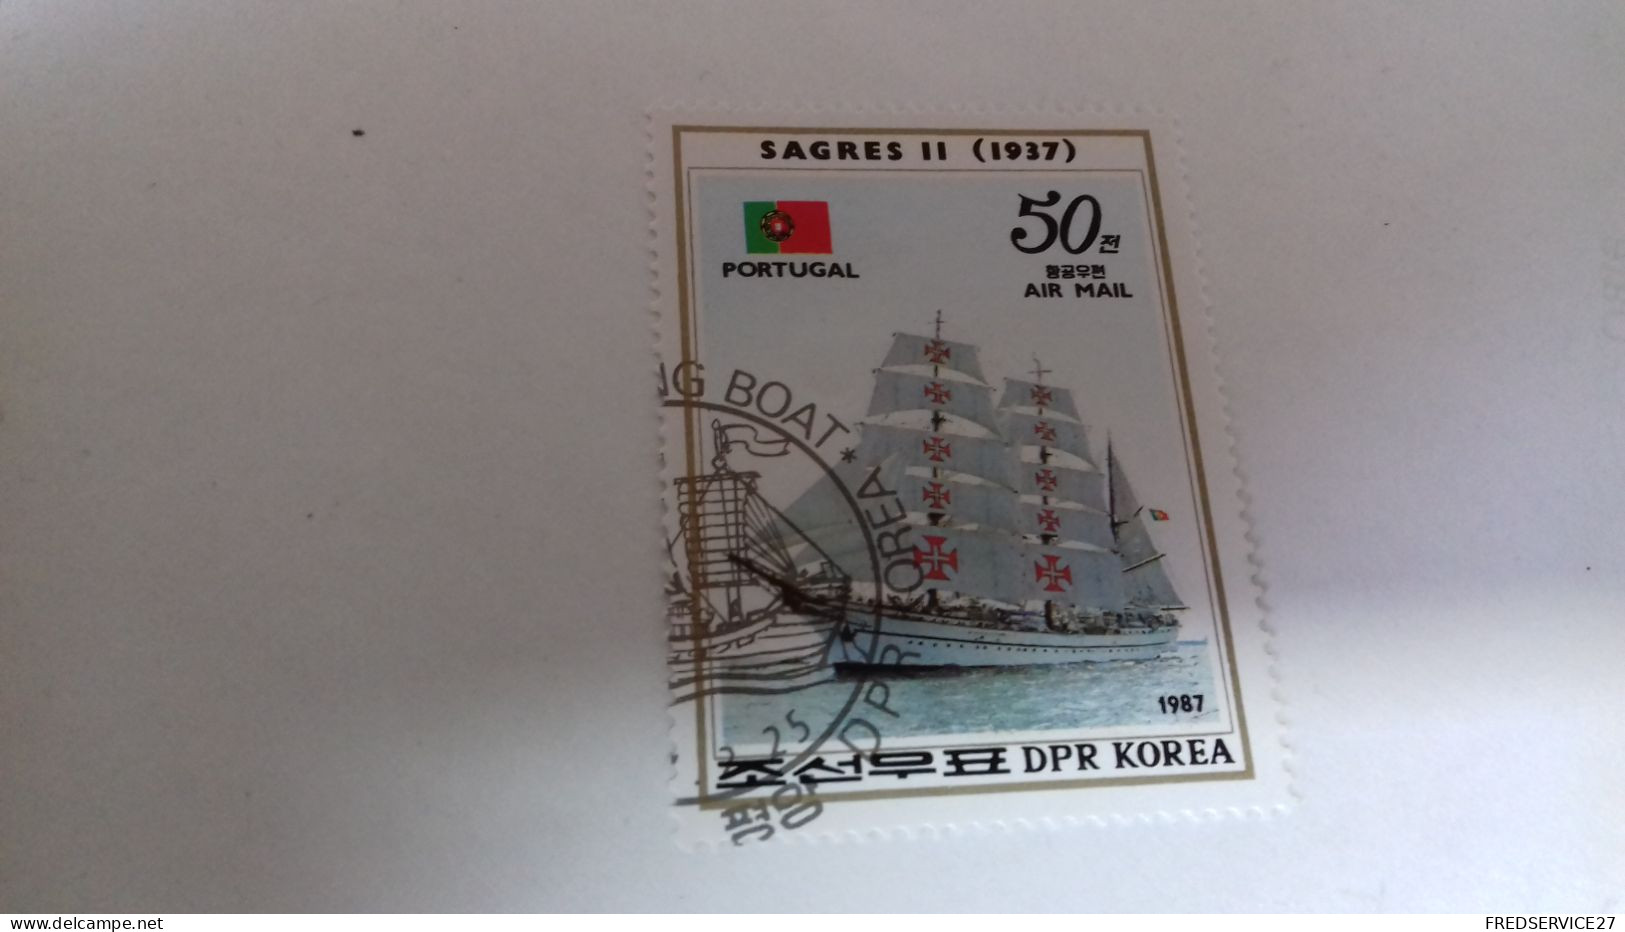 LR / DPR KOREA SAGRES II 1937 BATEAU - Corée Du Nord